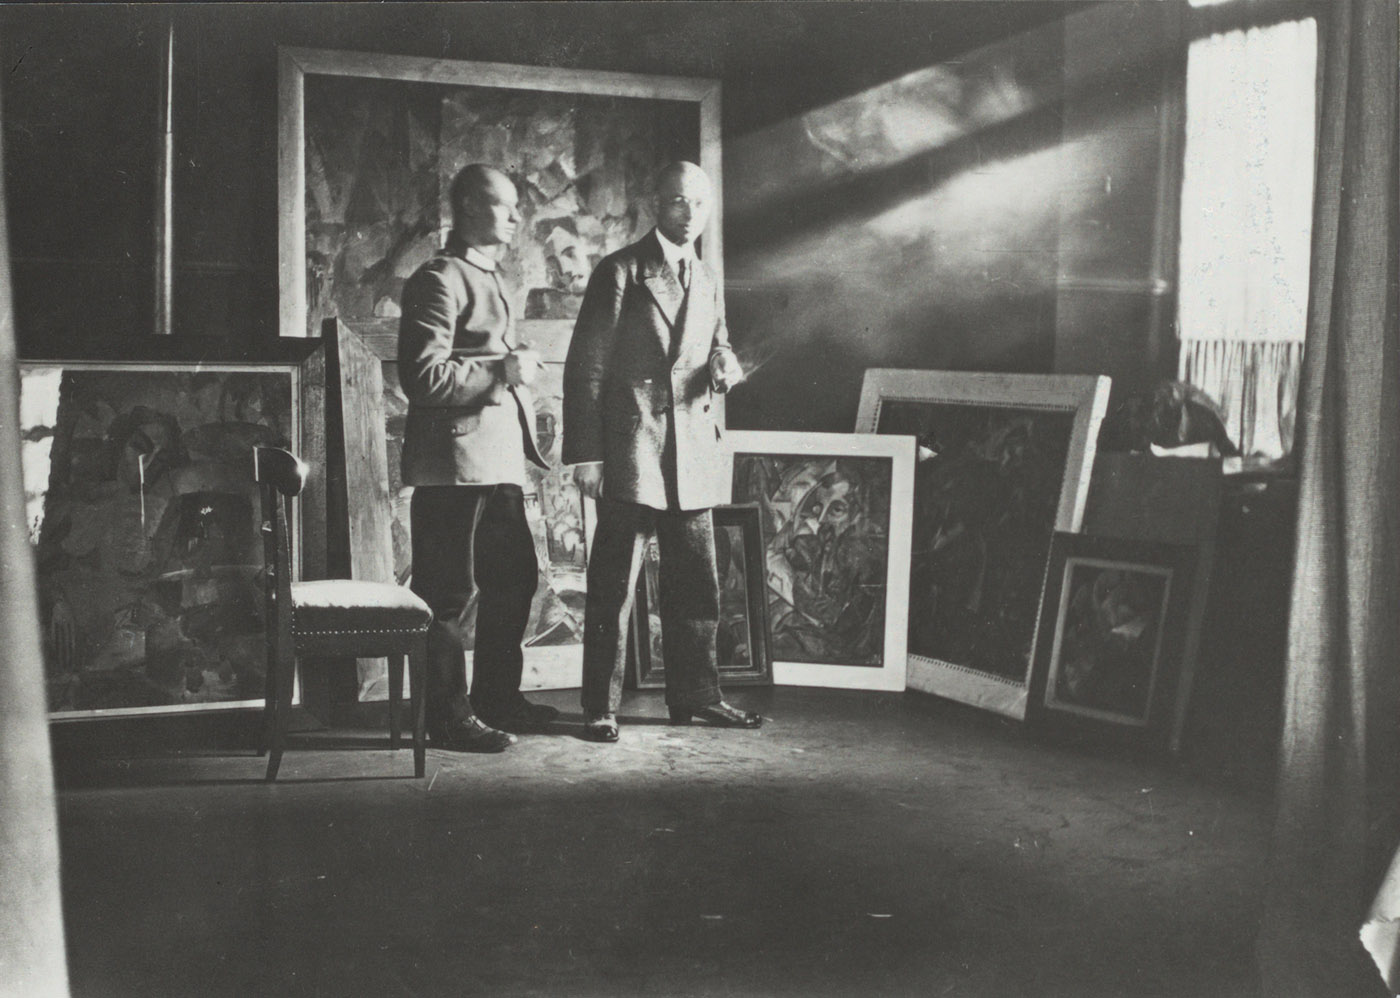 Johannes Itten in his studio with Oskar Schlemmer, Stuttgart 1913, with his early abstract paintings in the background (Hs NL 11: Ba 3.7; <a href="https://doi.org/10.7891/e-manuscripta-123165">Digitalisat</a>)